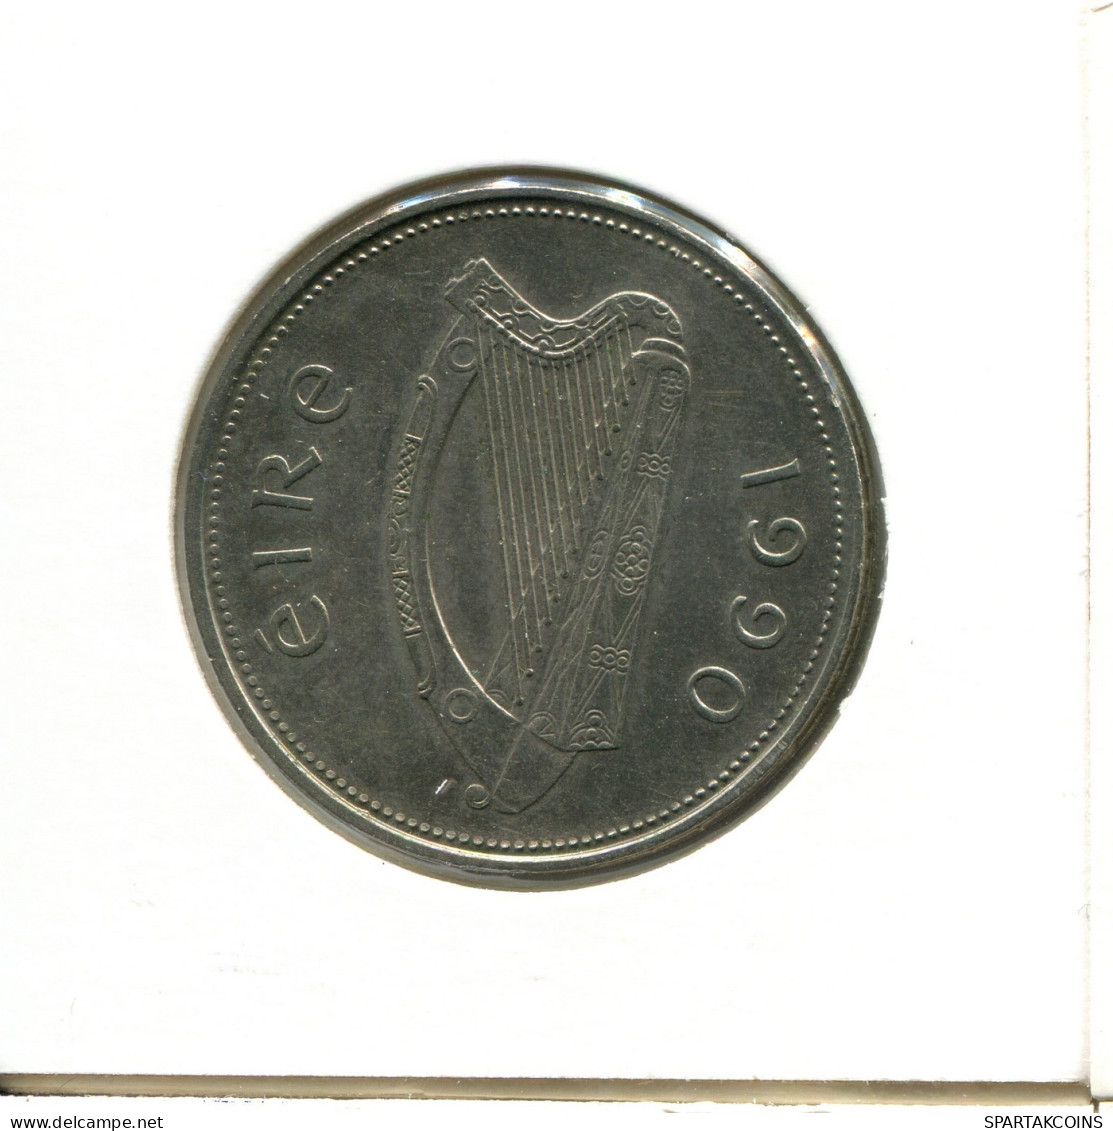 1 POUND 1990 IRLANDE IRELAND Pièce #AX764.F.A - Irland